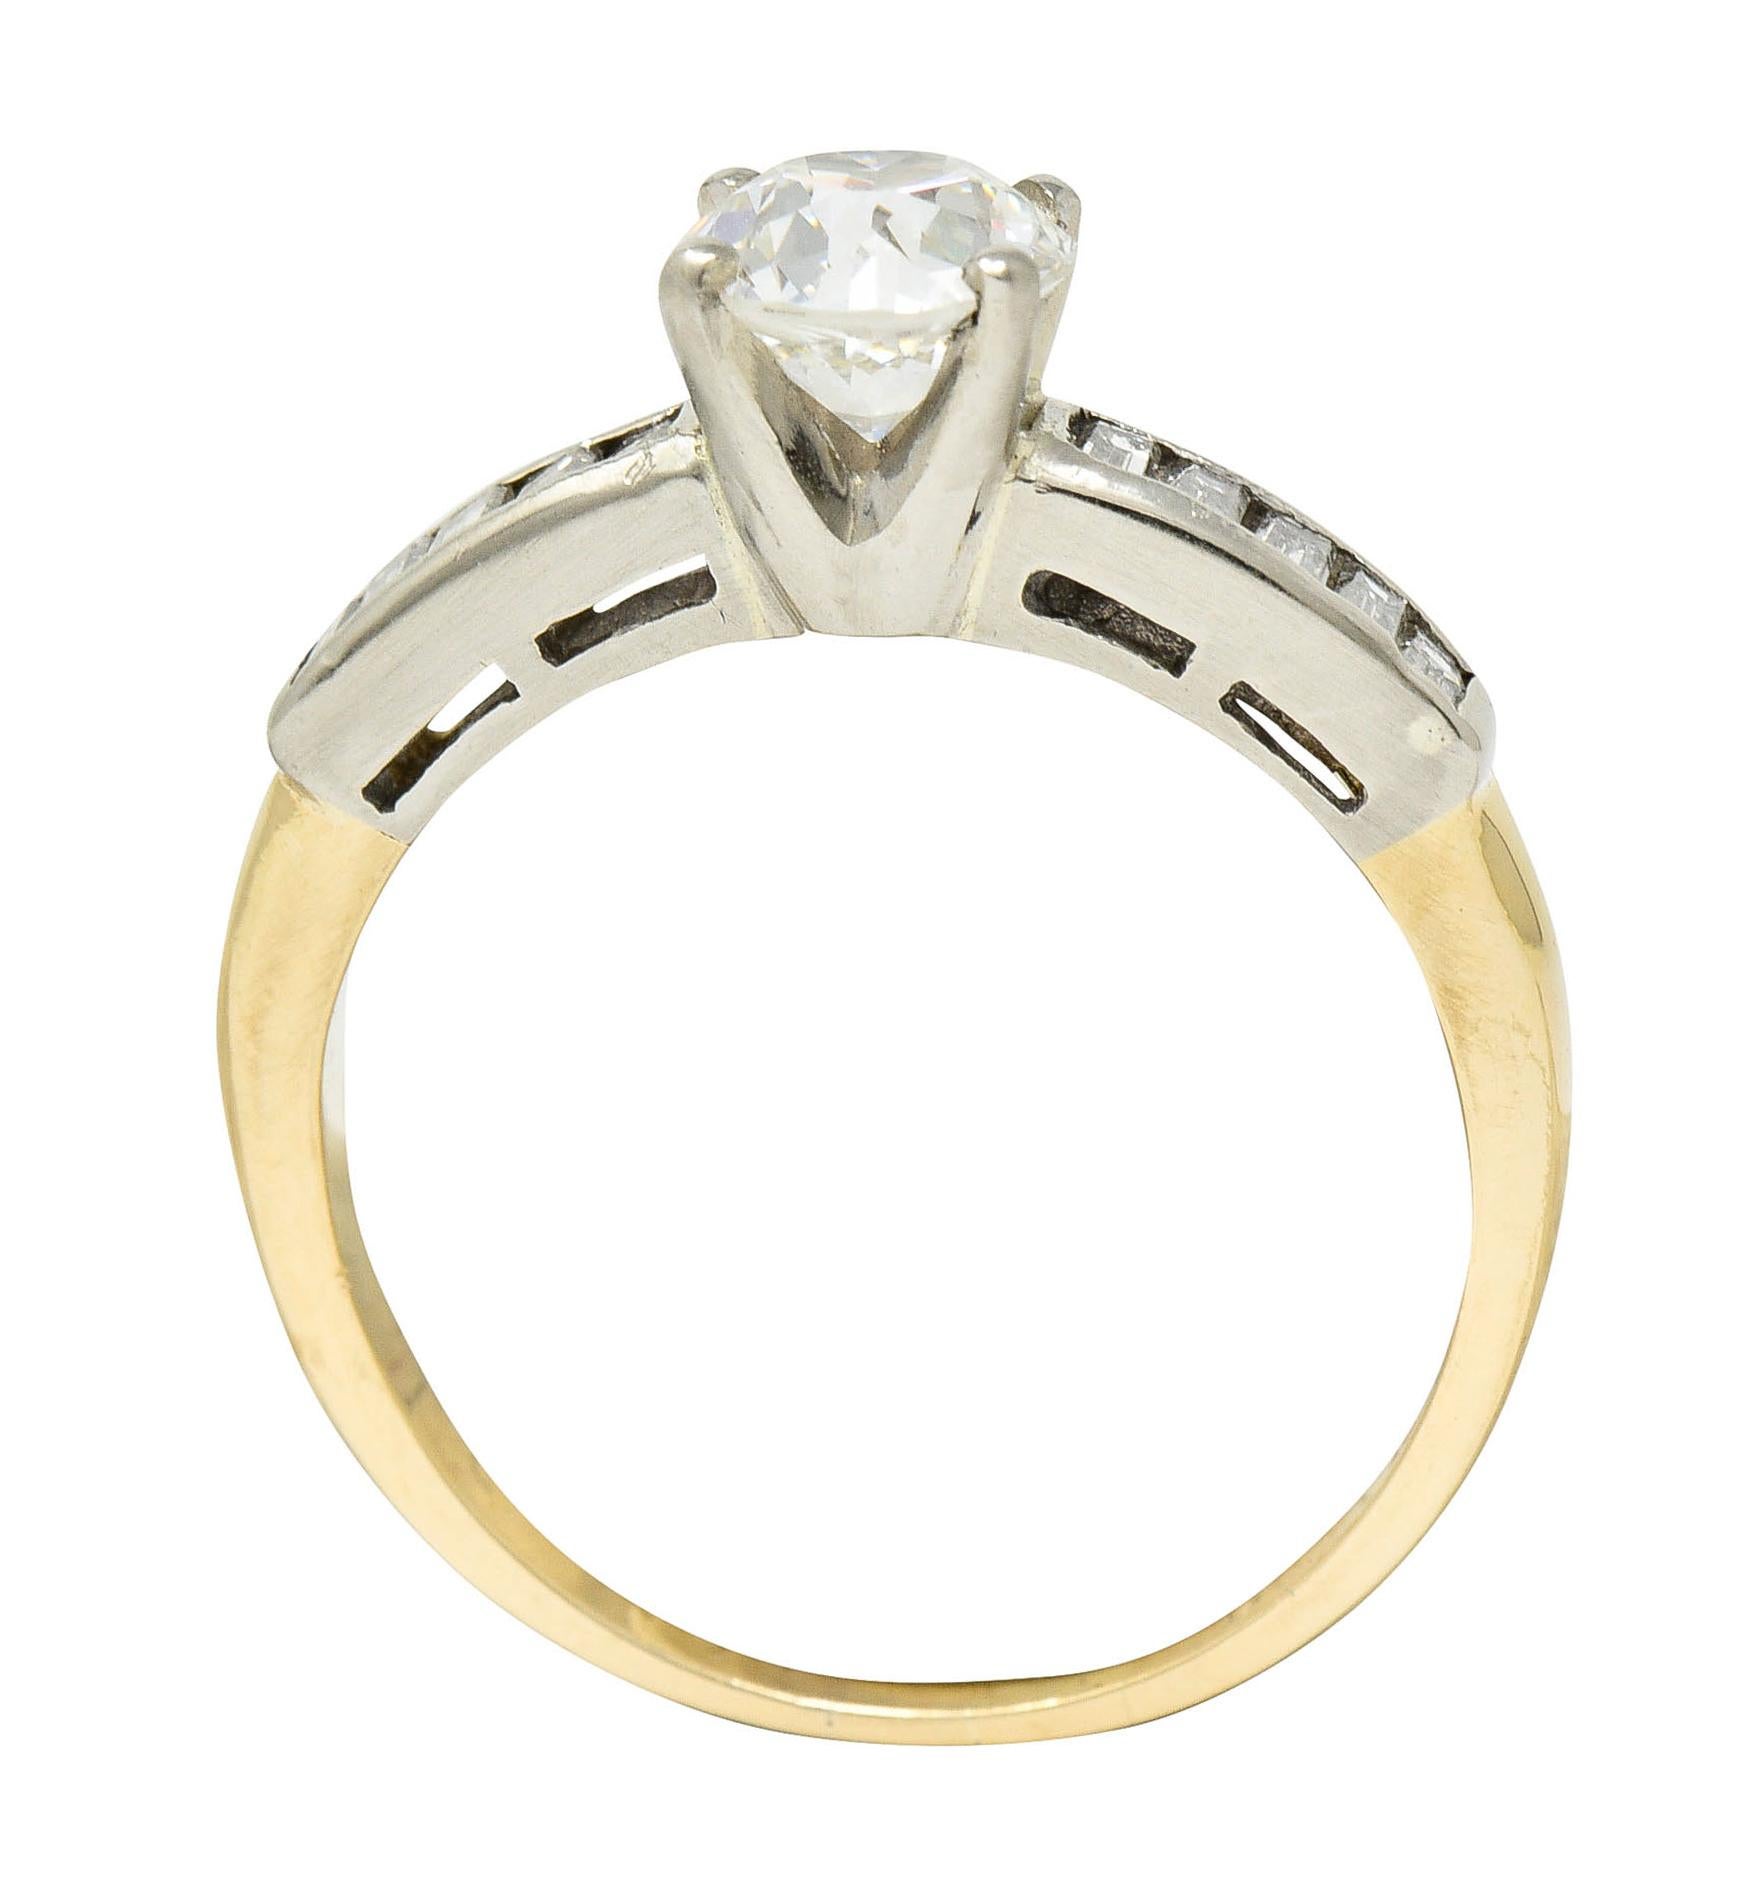 1940's Retro 1.29 Carats Diamond 14 Karat Two-Tone Engagement Ring GIA For Sale 2